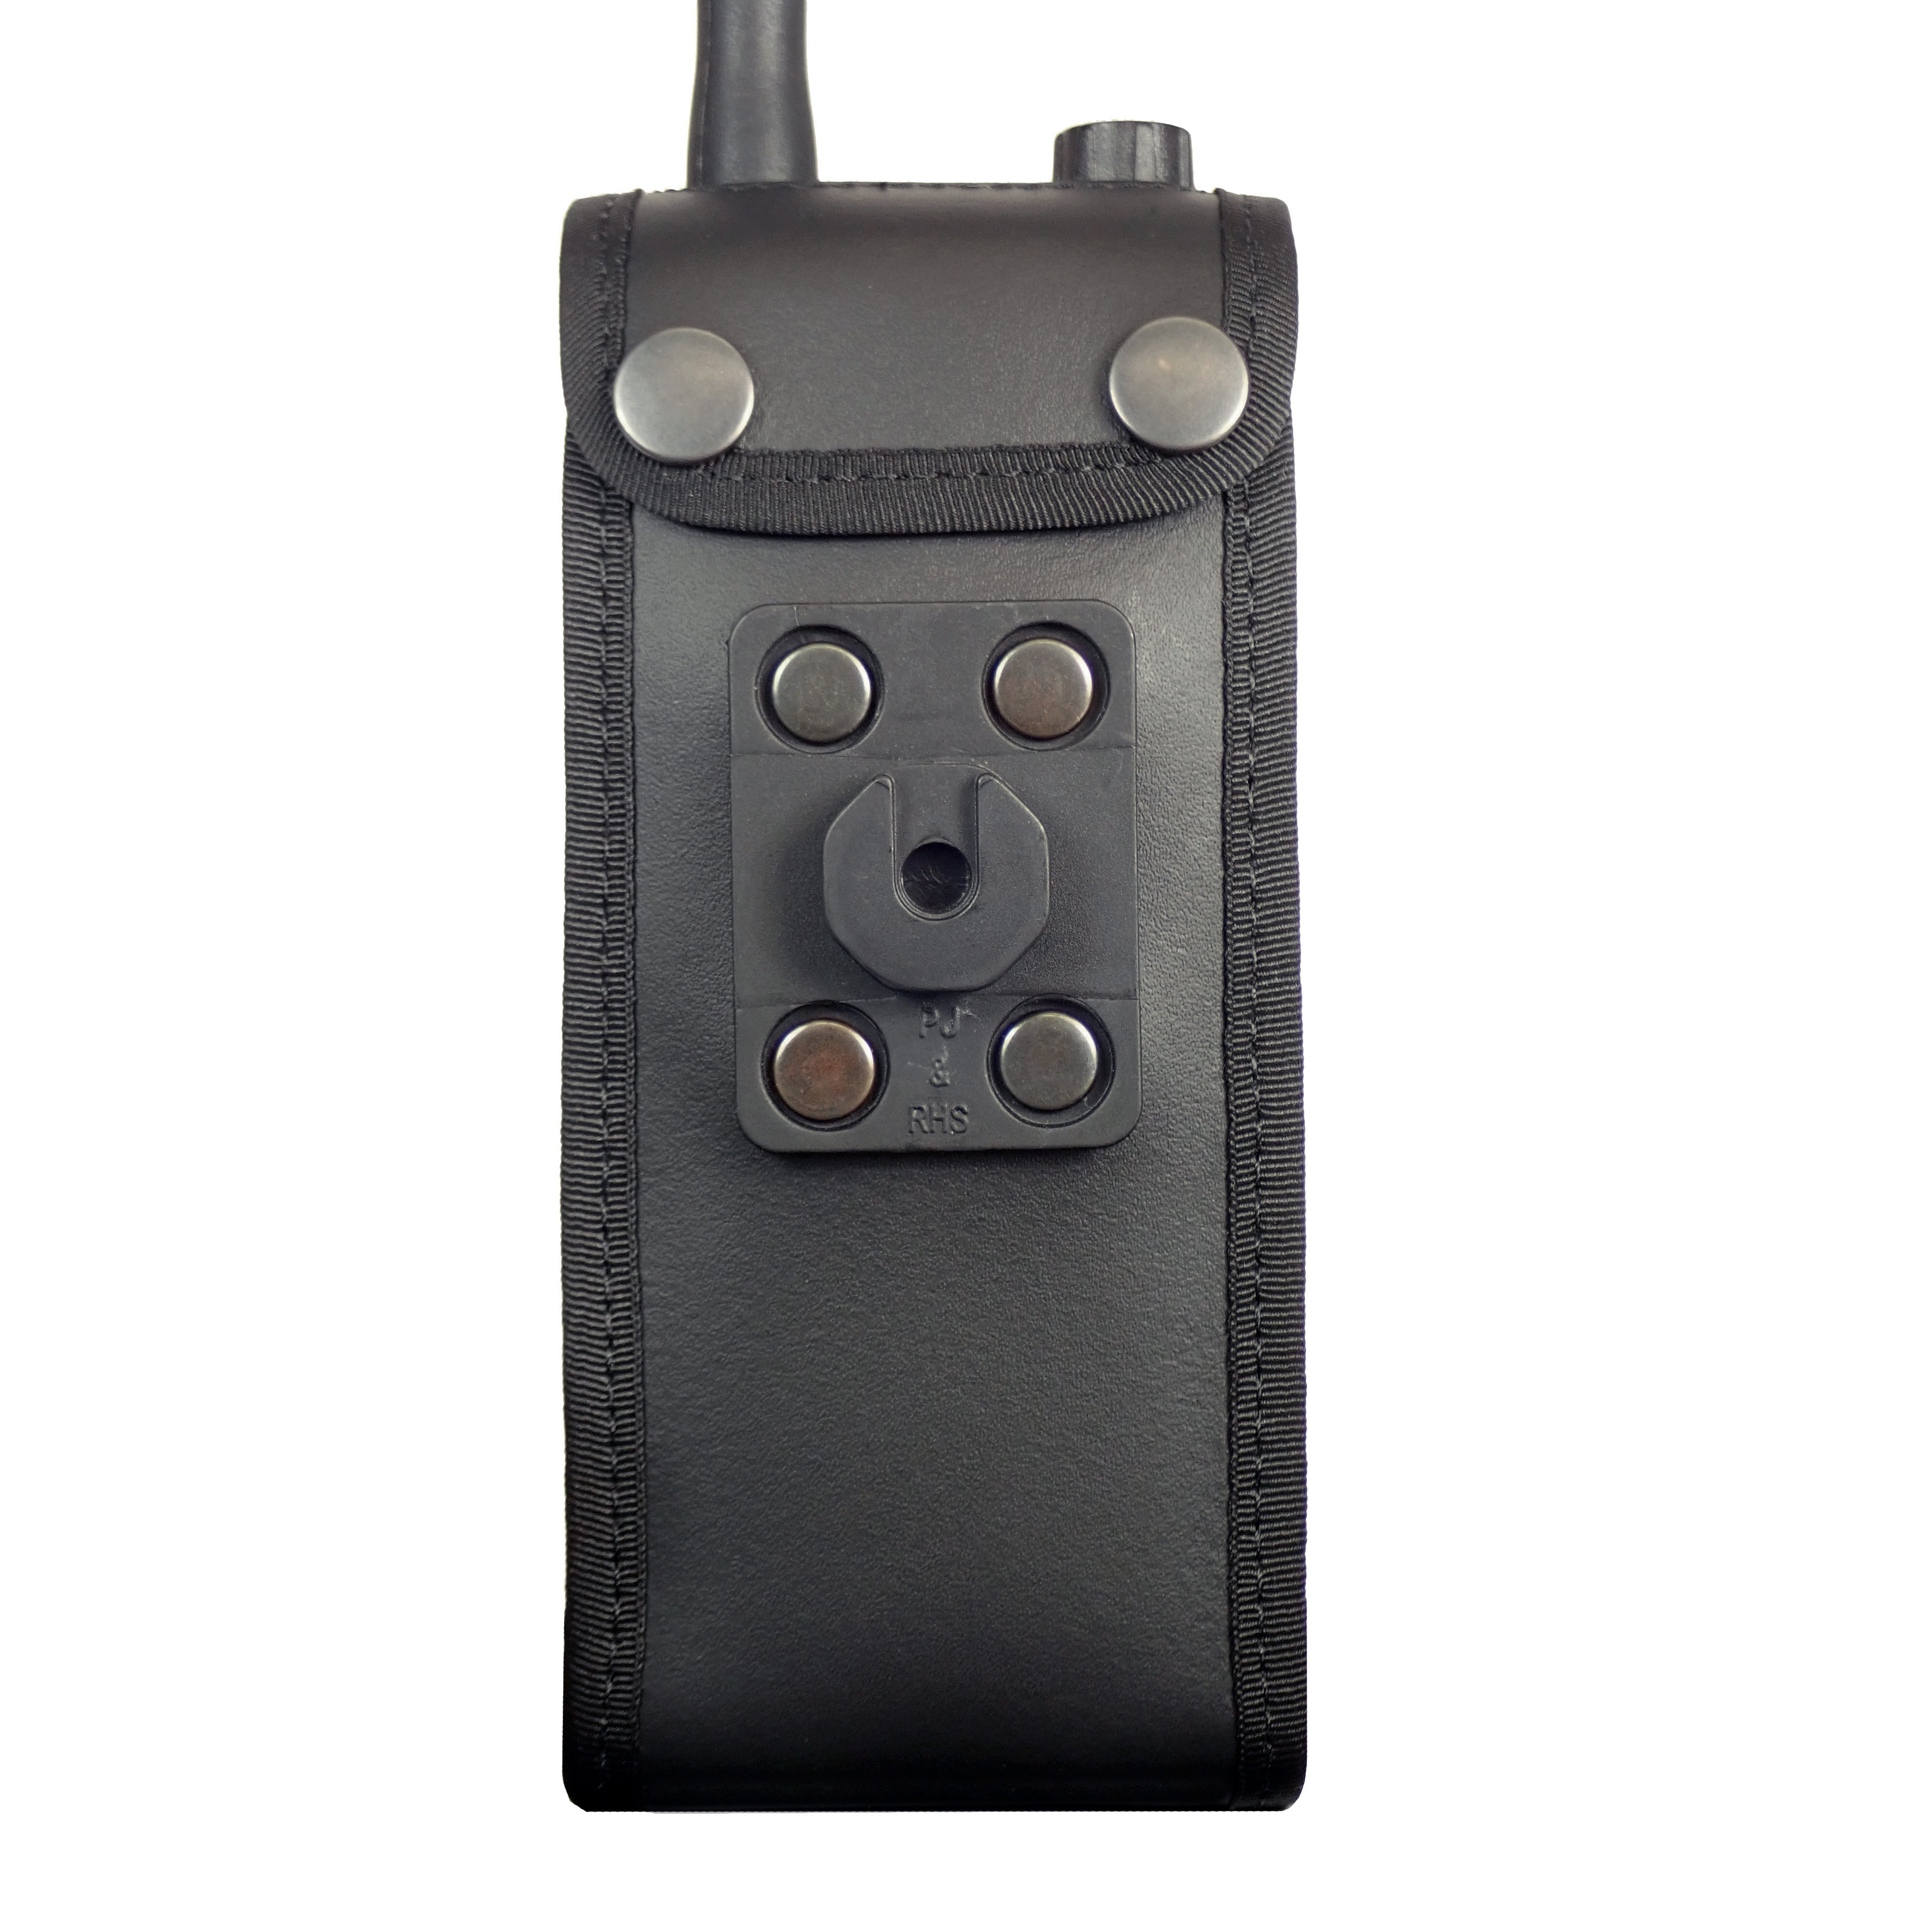 Sepura SC2020 Tetra leather radio case with Click-On